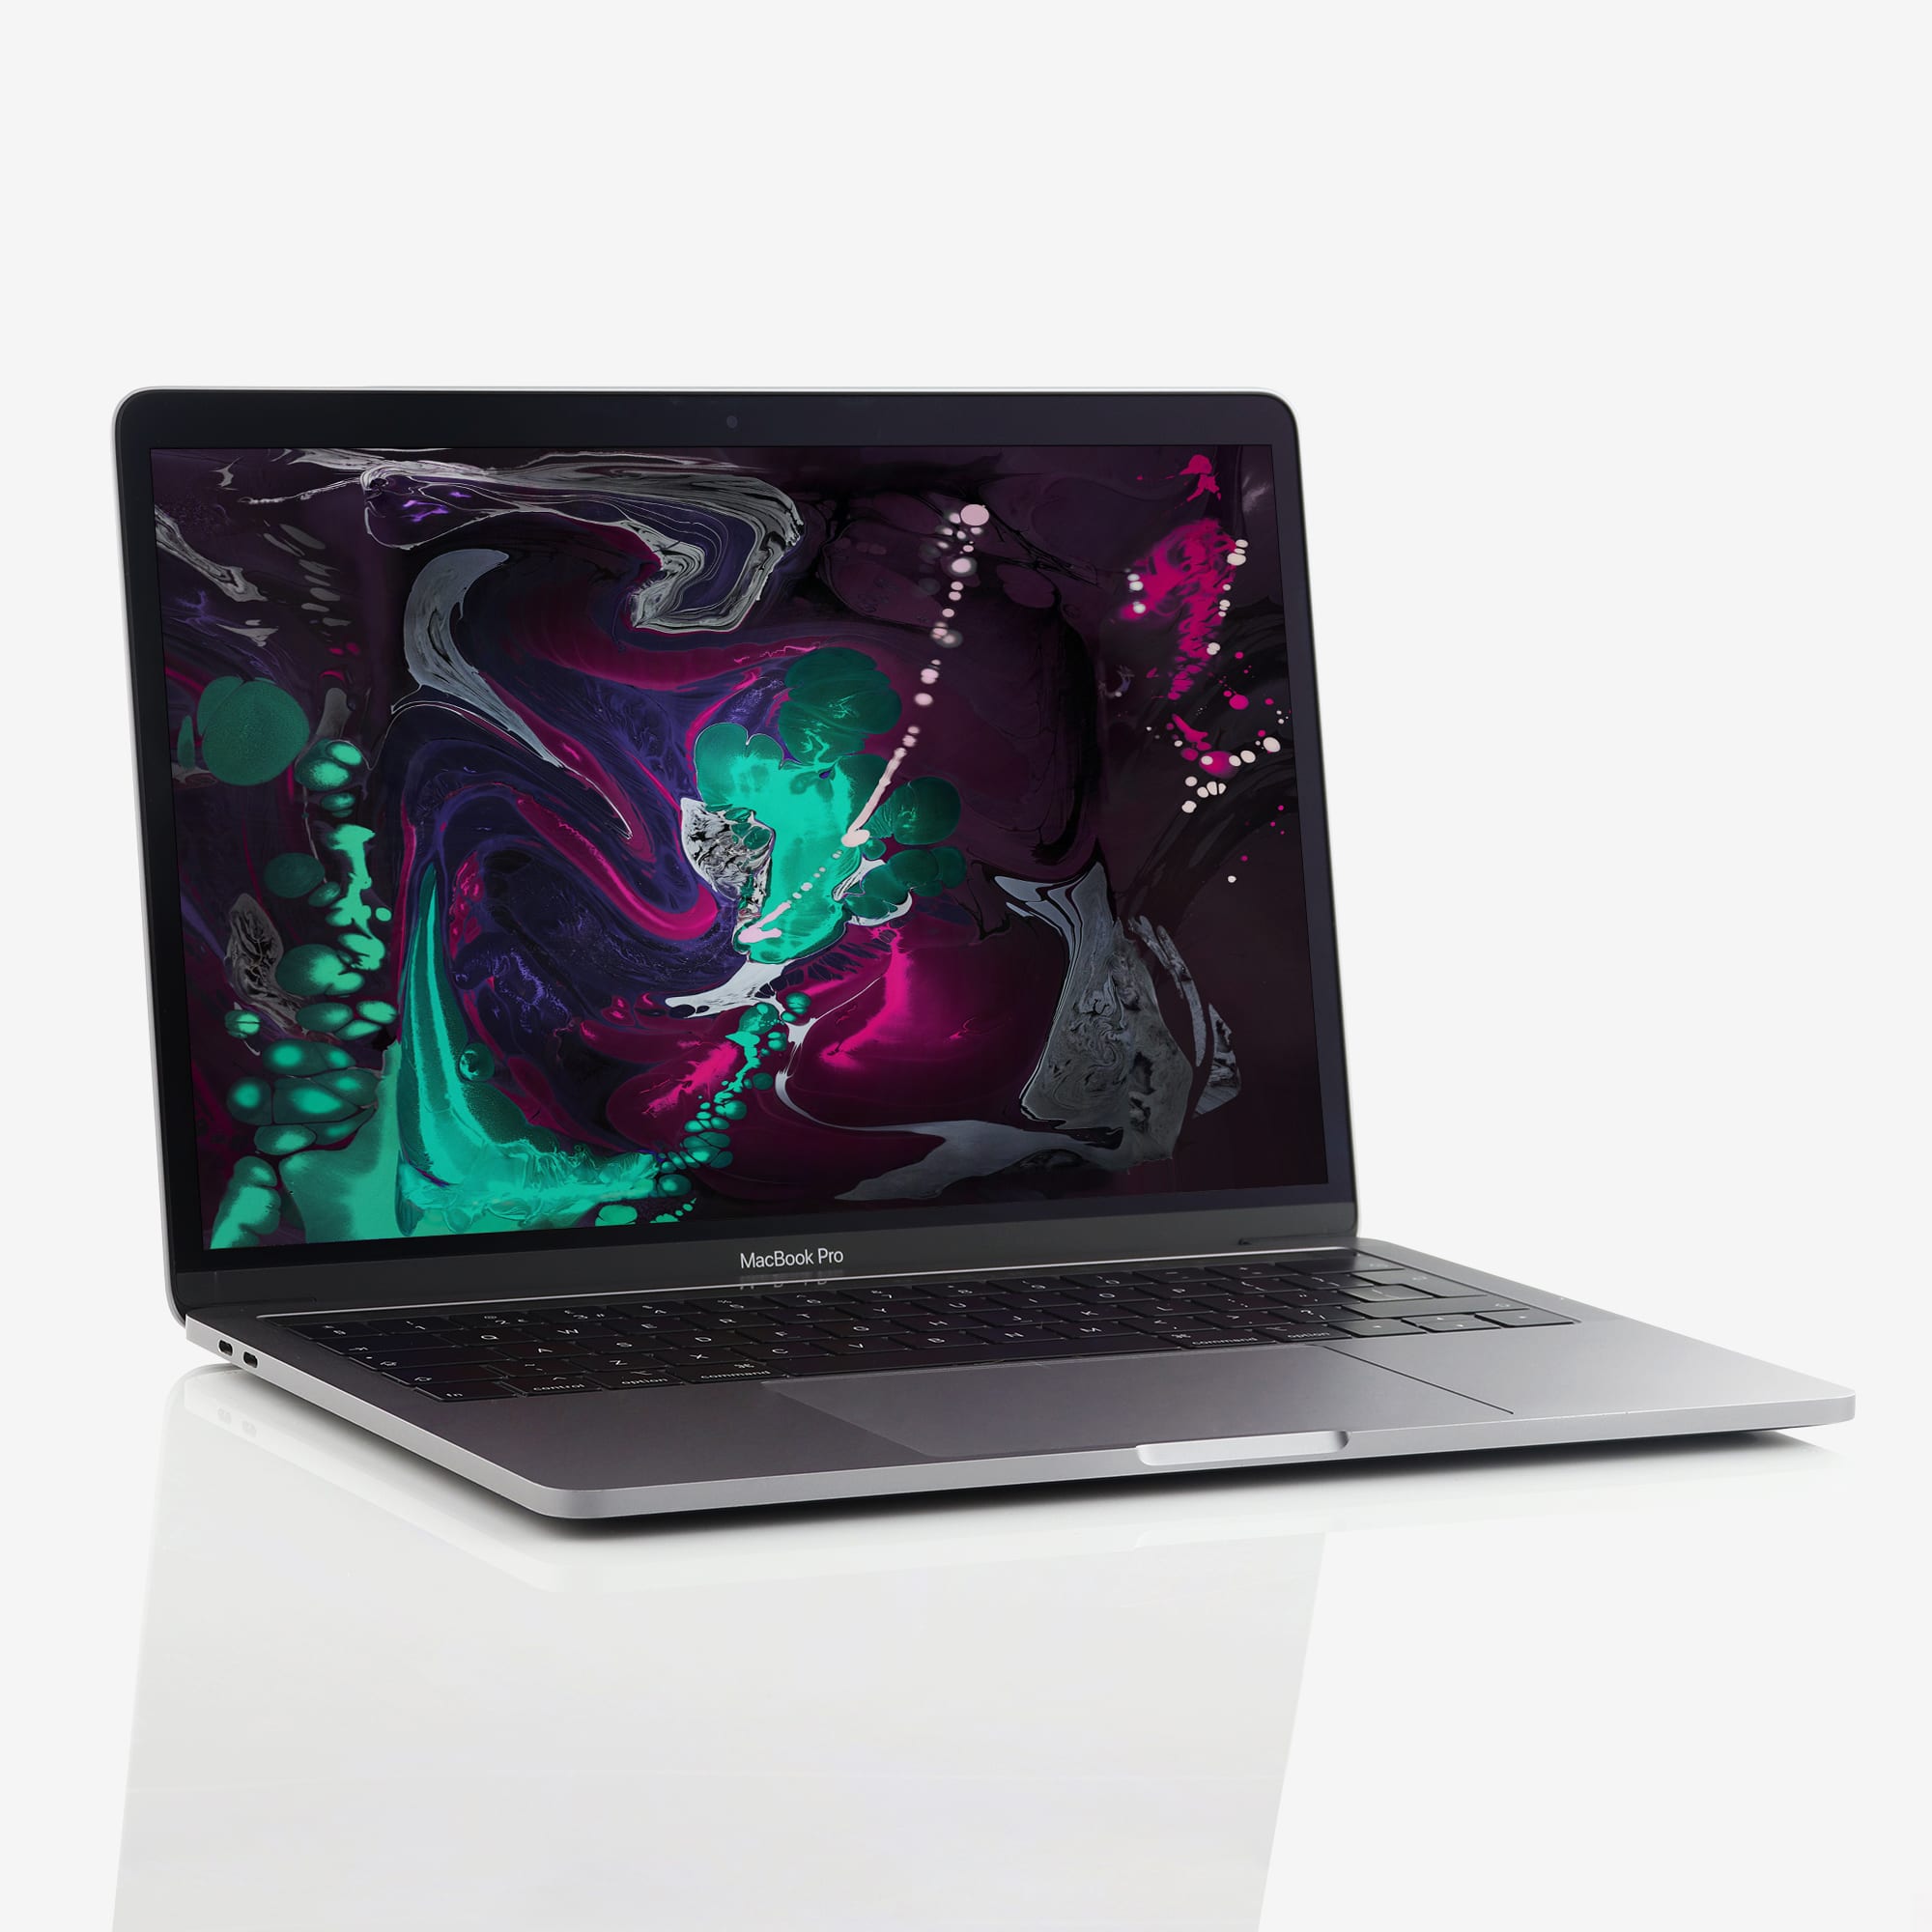 1 x Apple MacBook Pro Retina 13 Inch Touchbar Intel Core i7 2.80 GHz (2019)